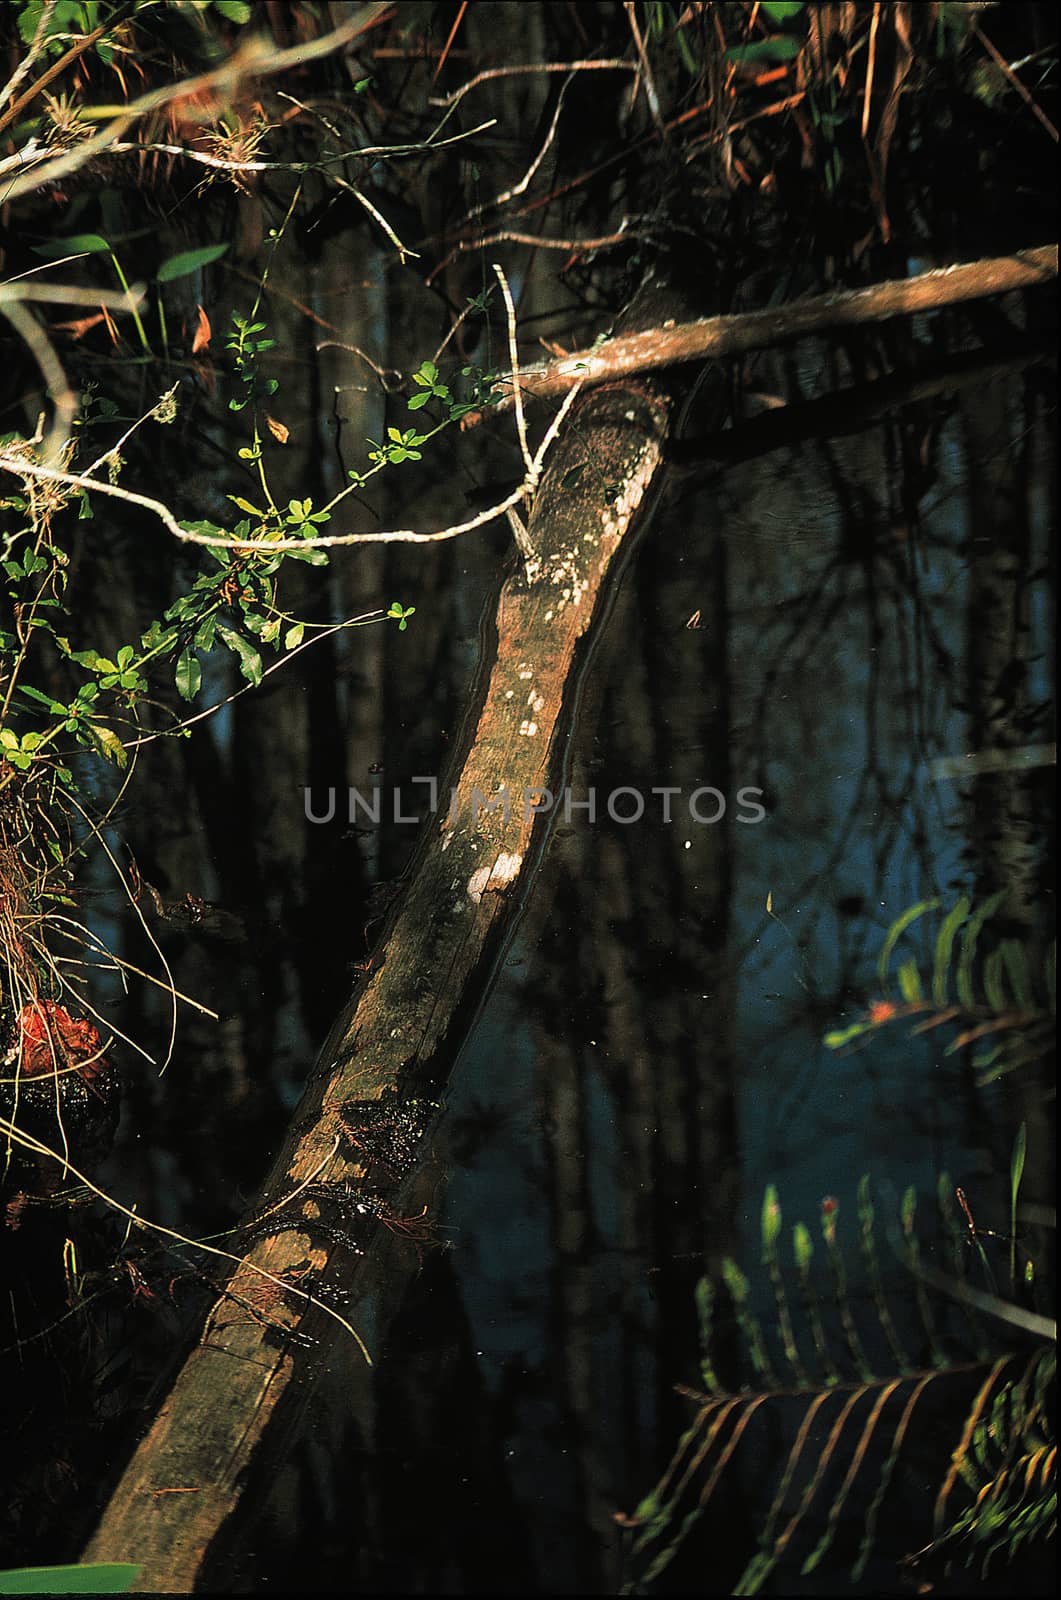 Fallen Tree Stump at Corkscrew Swamp Sanctuary